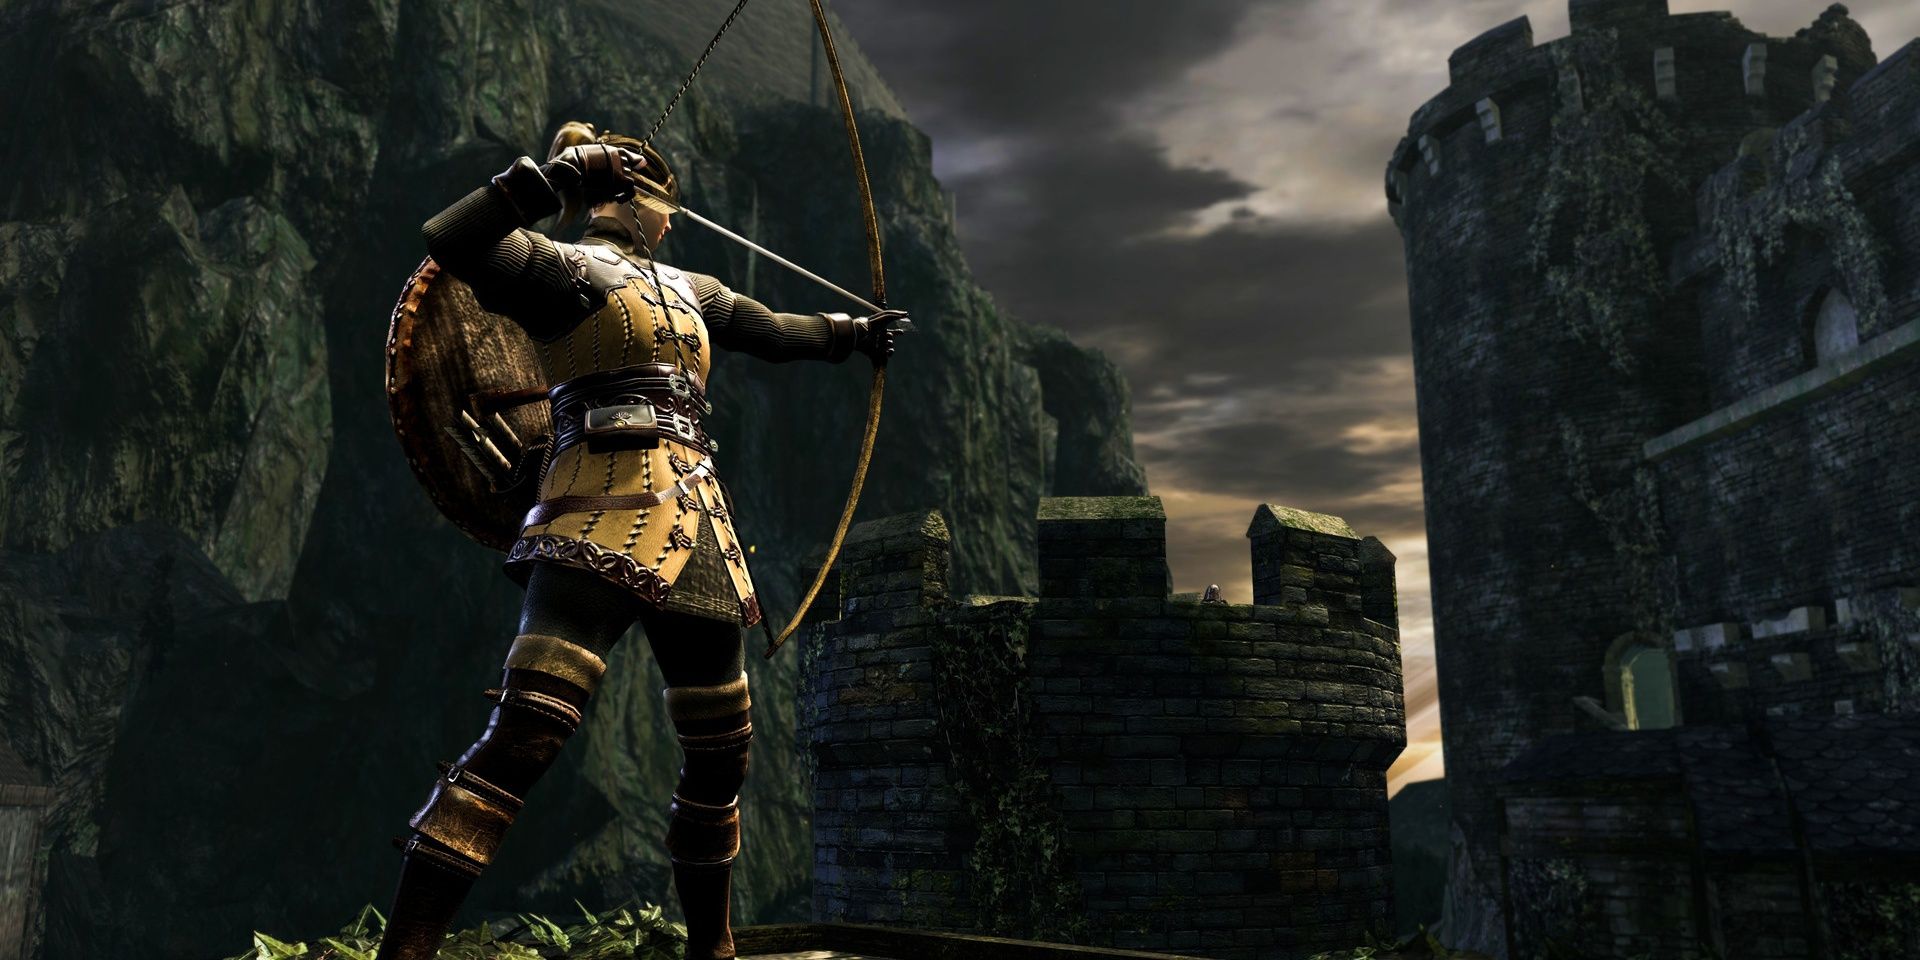 Dark Souls character using a bow